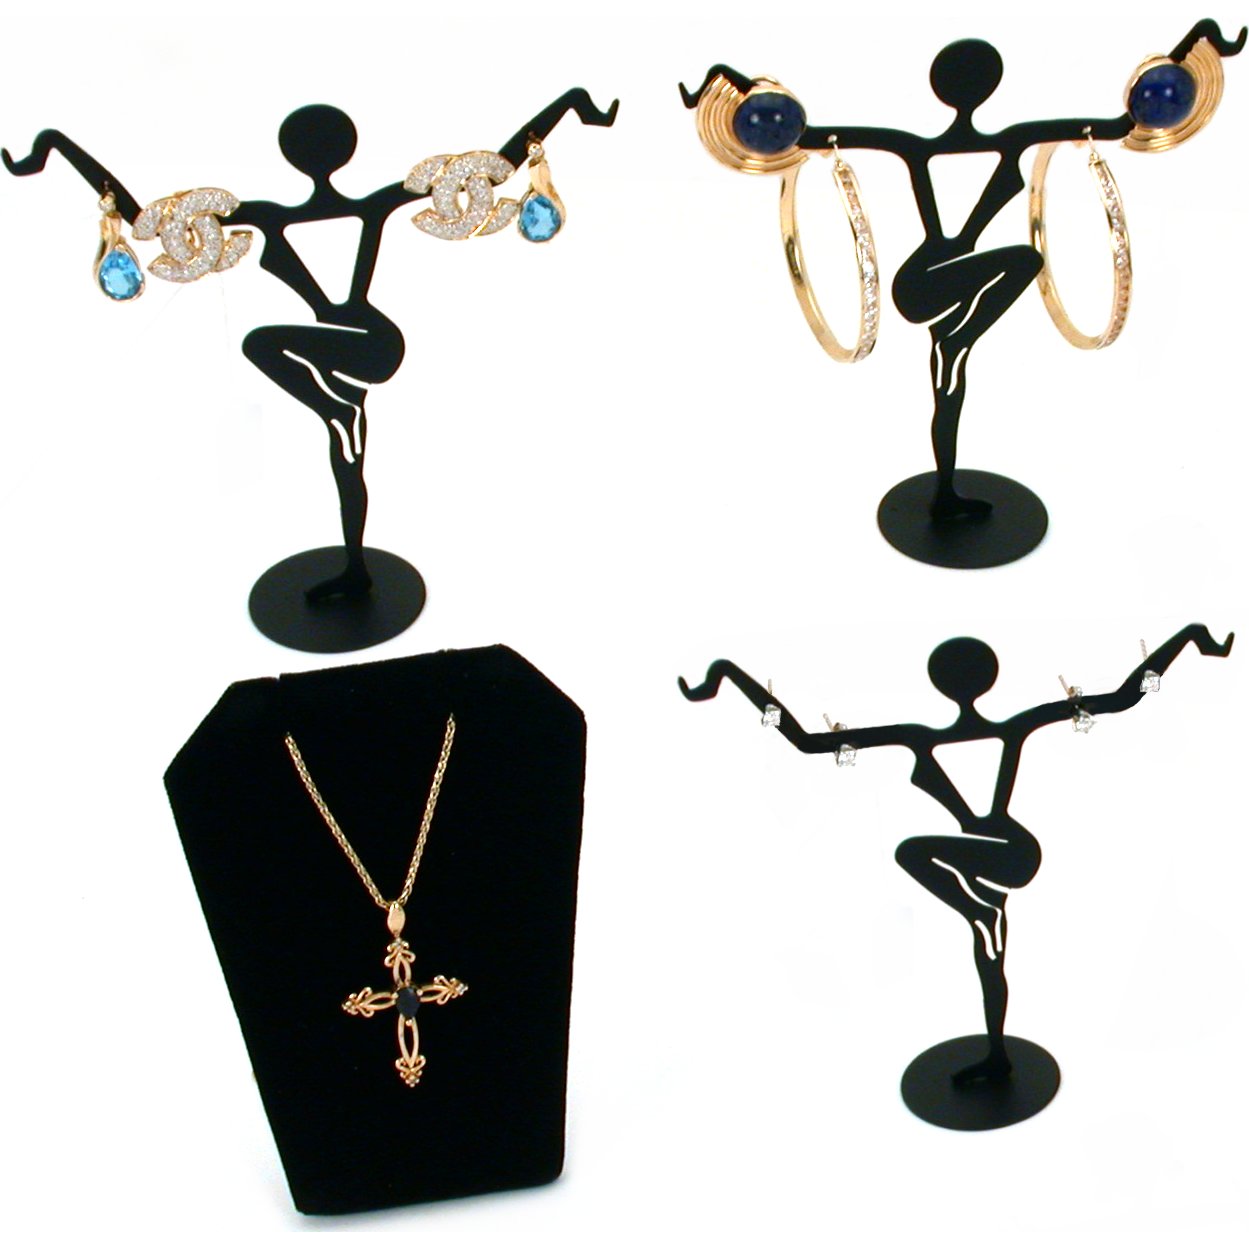 3 Lady Dancers Earring Displays Jewelry Set Free Bonus